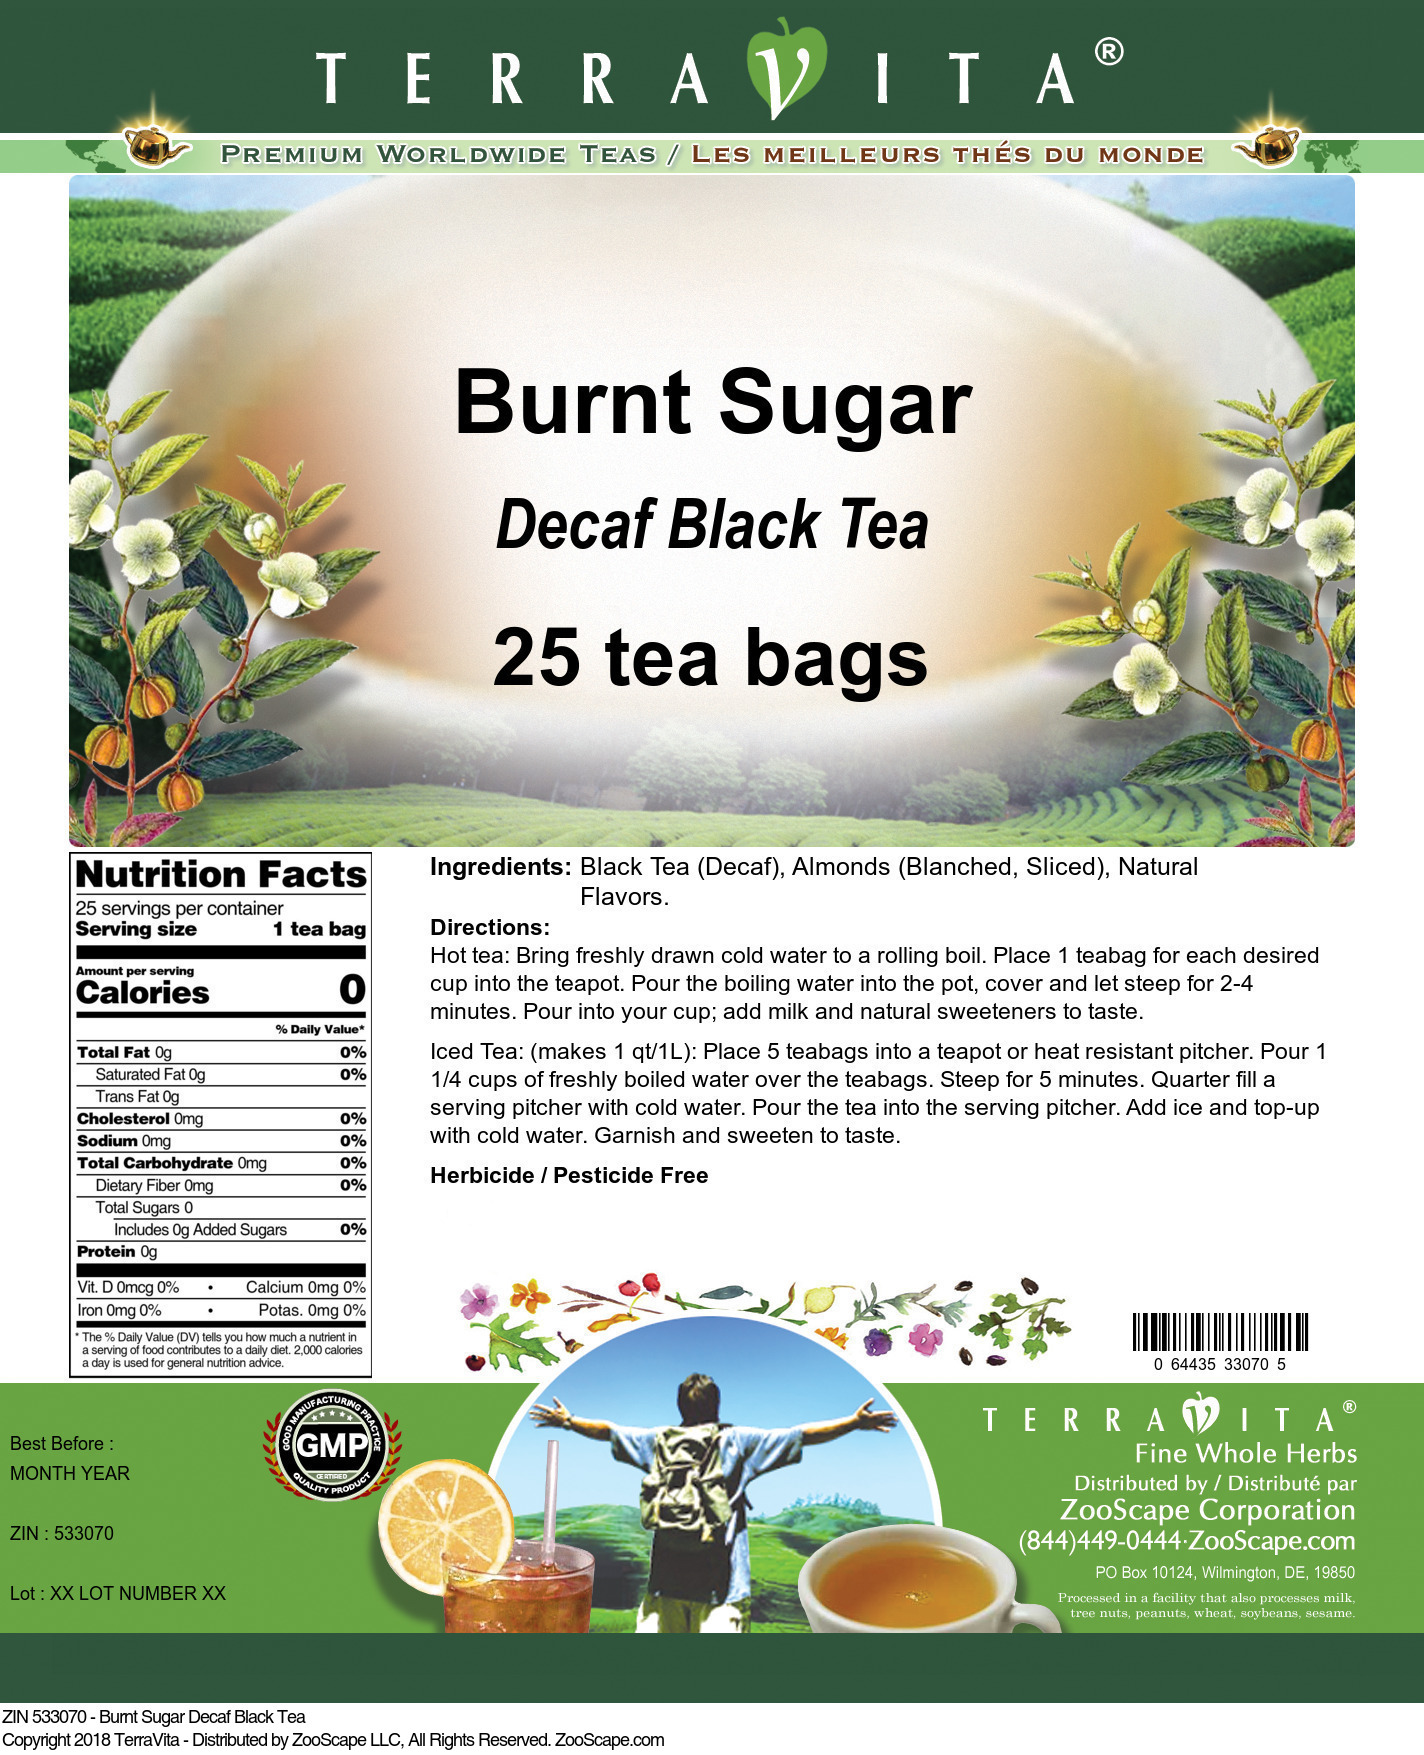 Burnt Sugar Decaf Black Tea - Label